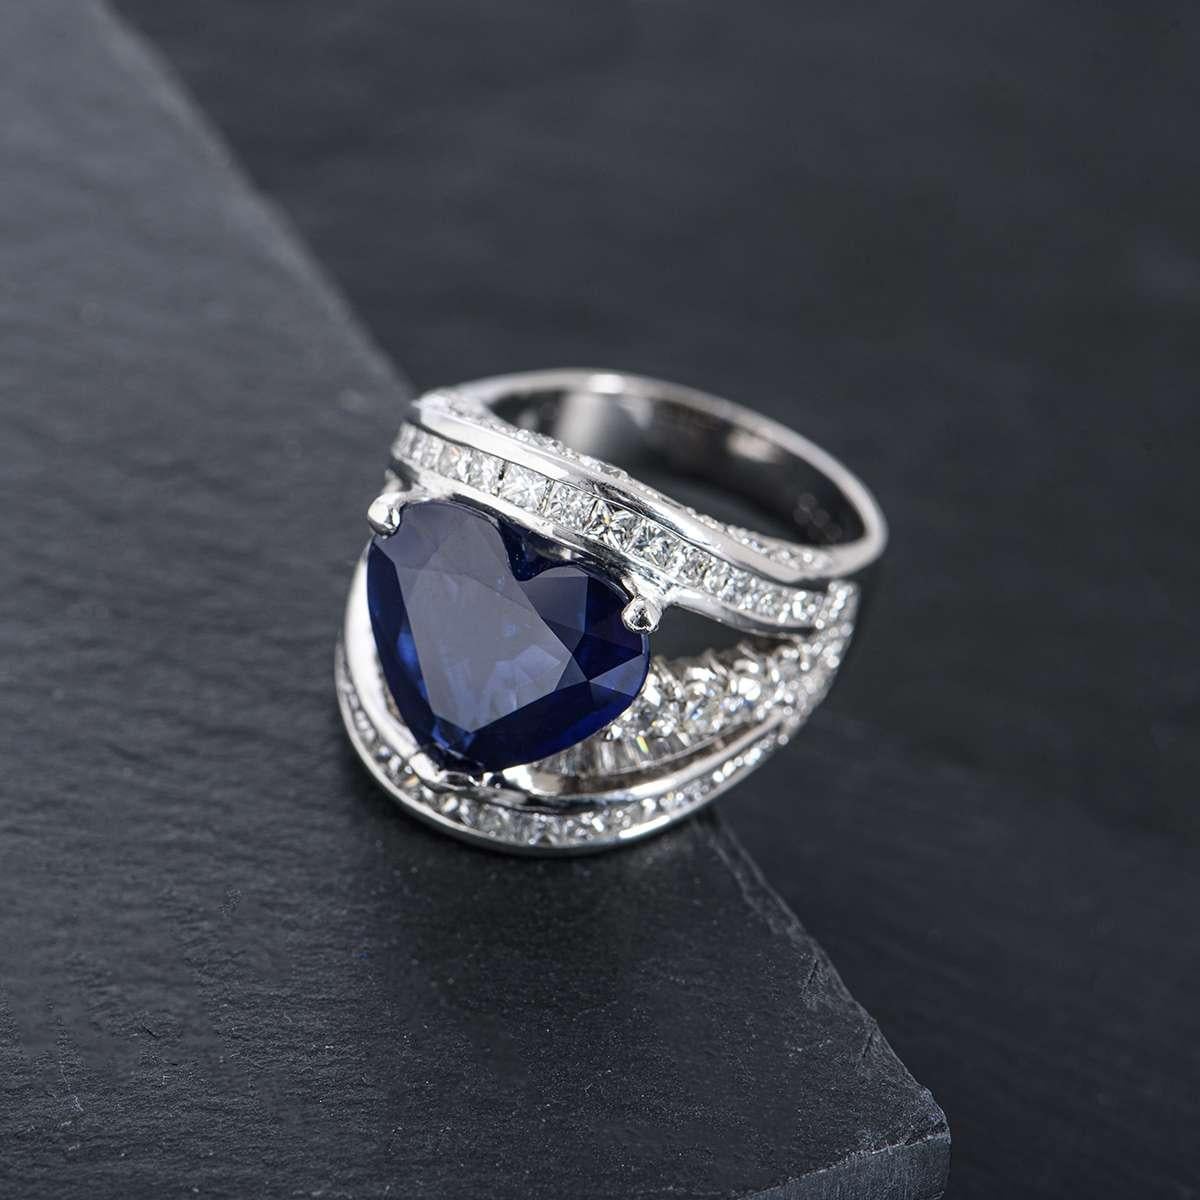 IGR Certified Heart Cut Sapphire and Diamond Ring 7.66 Carat Sapphire 1